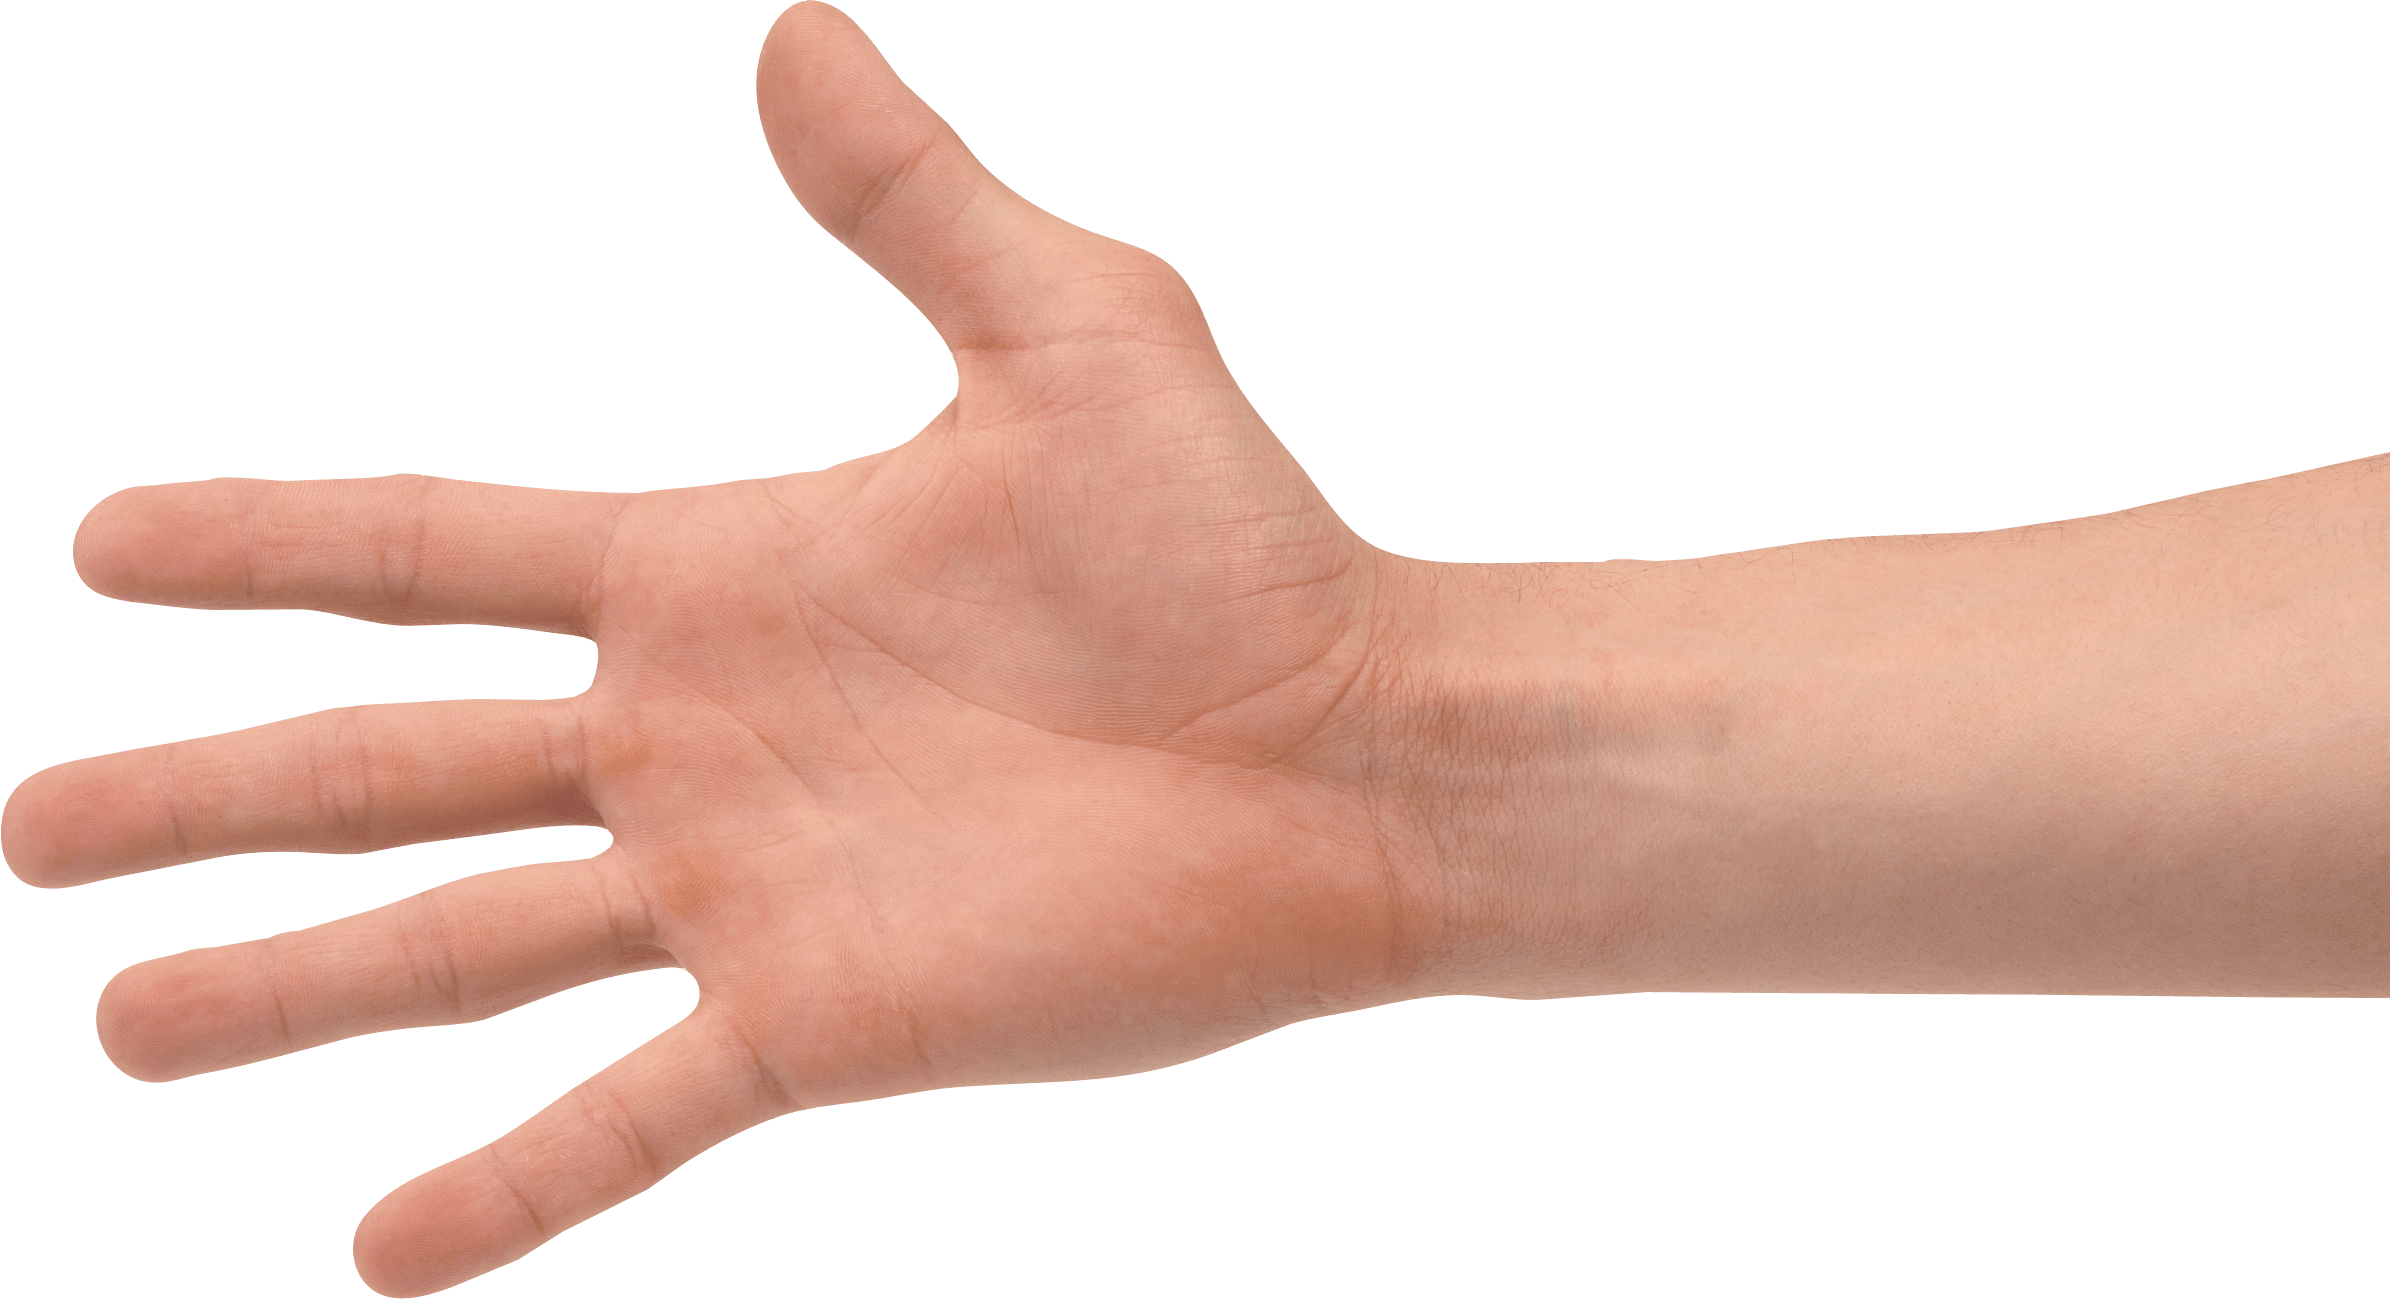 Hands PNG Transparent Hands.PNG Images. PlusPNG